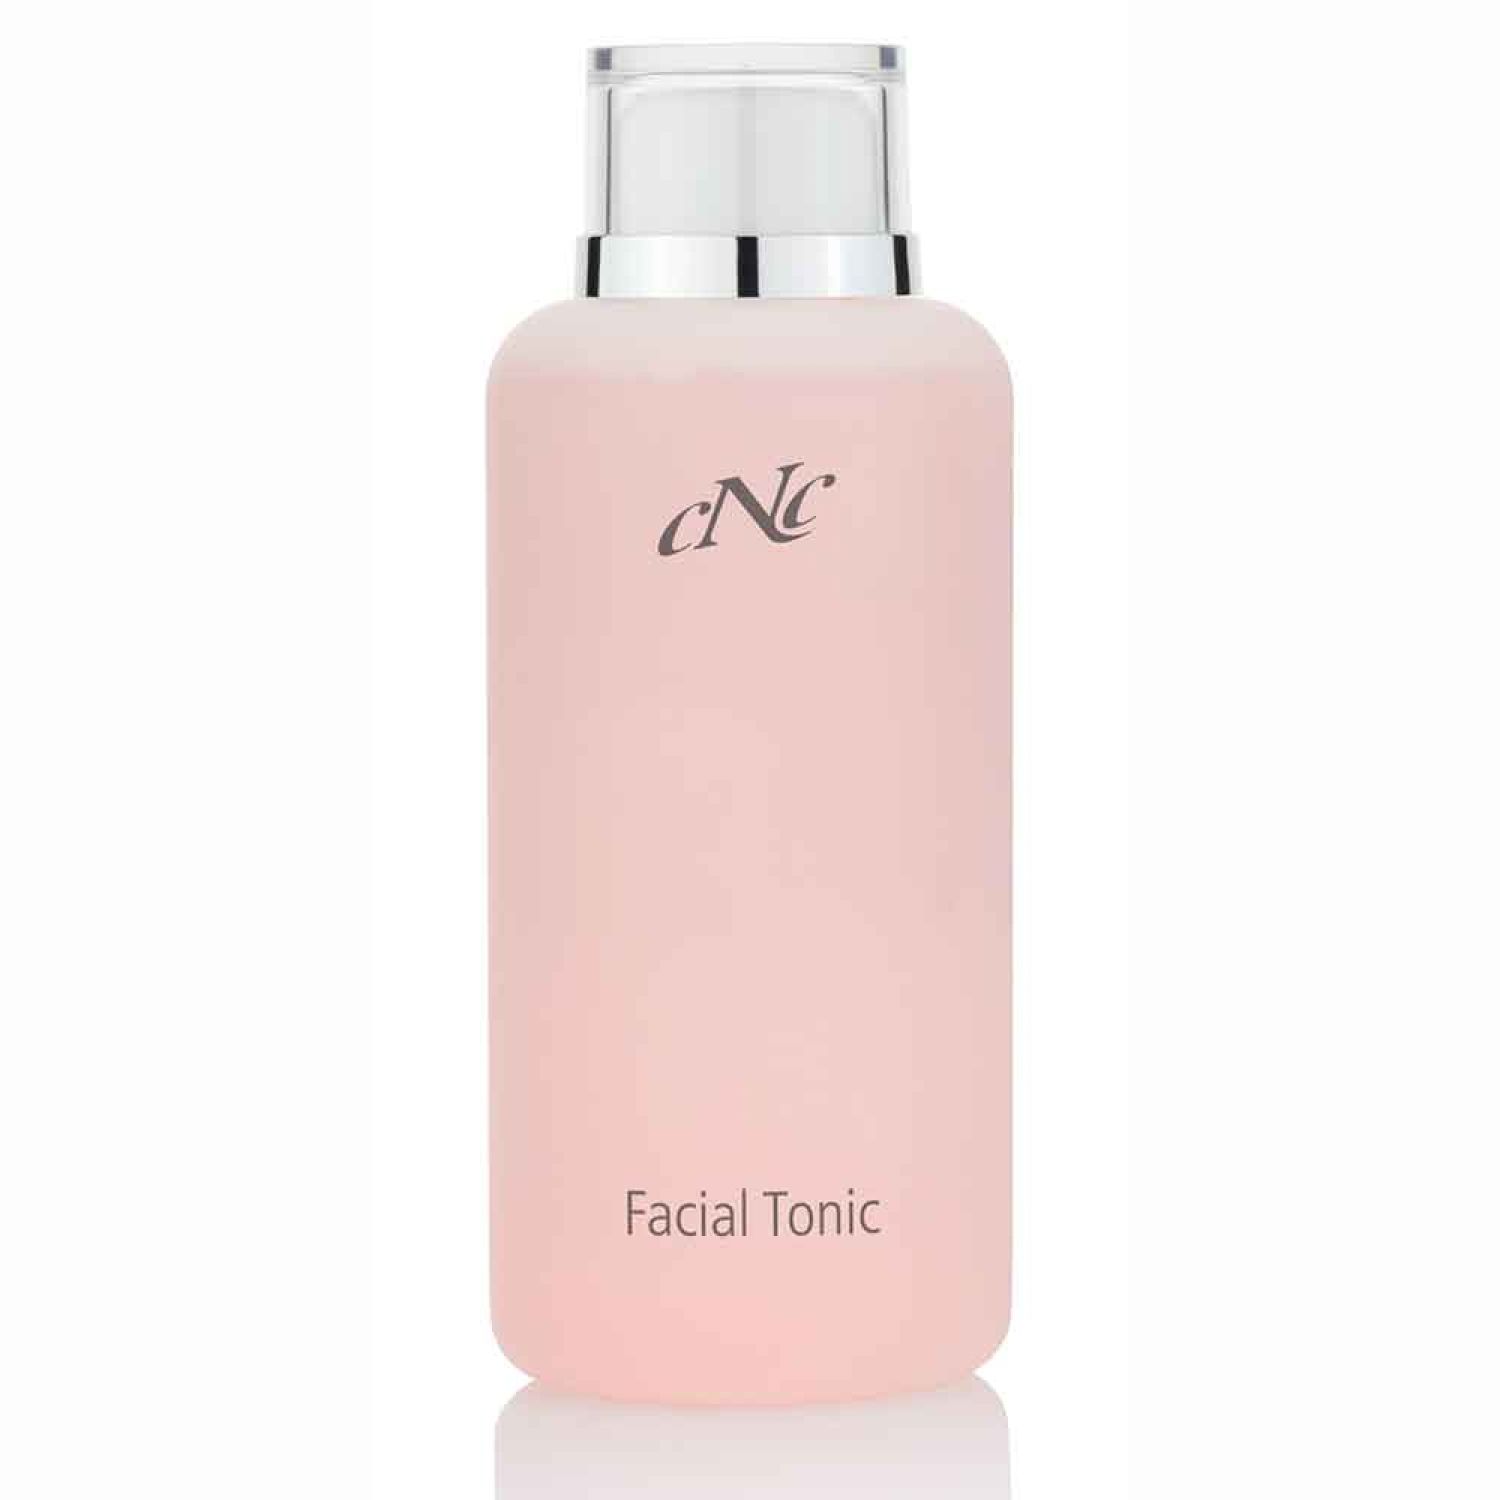 CNC cosmetic aesthetic world Facial Tonic